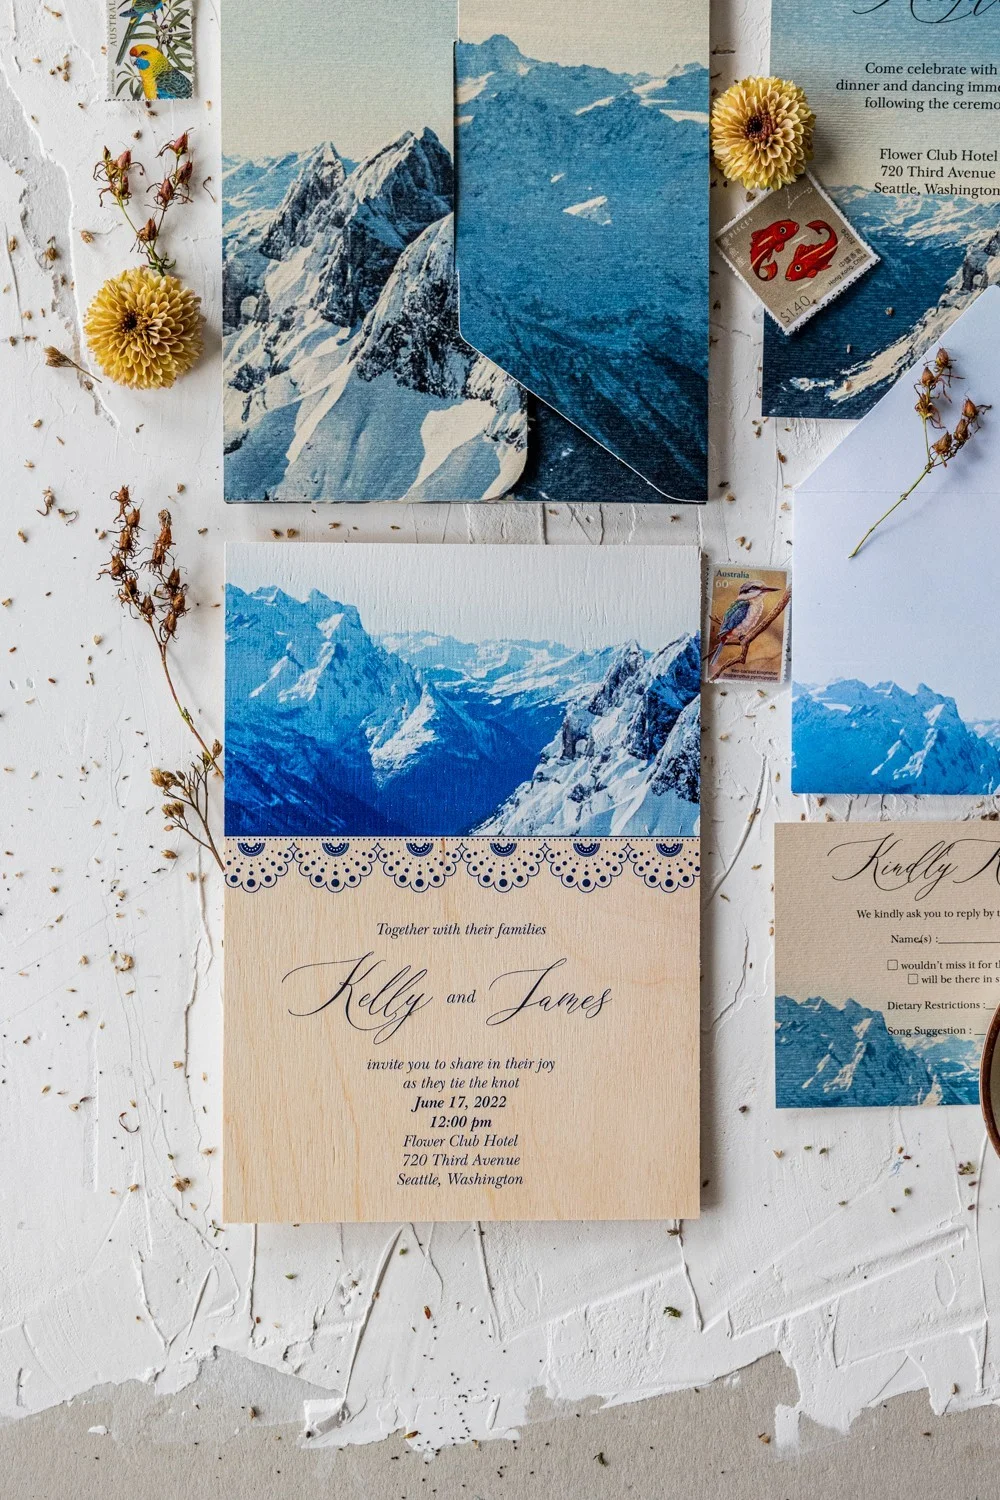 Mountain Wooden Wedding Invitation: Rustic, Handmade Envelope, Destination Invites - GL44